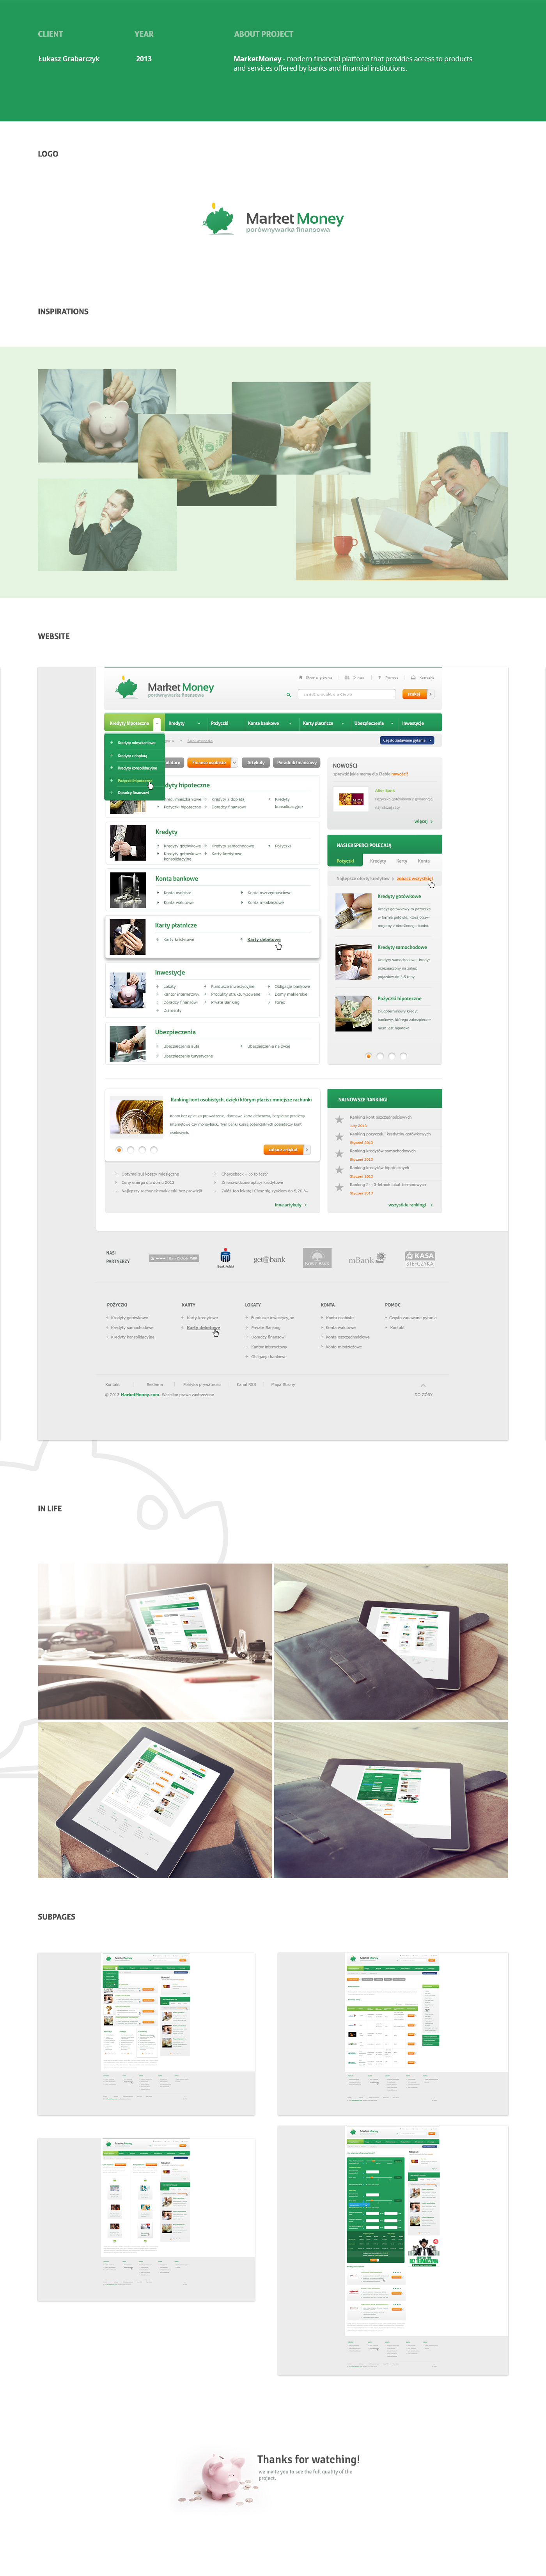 market money citrea Layout modern fresh Bank clean Web Website green pig creative Platform design